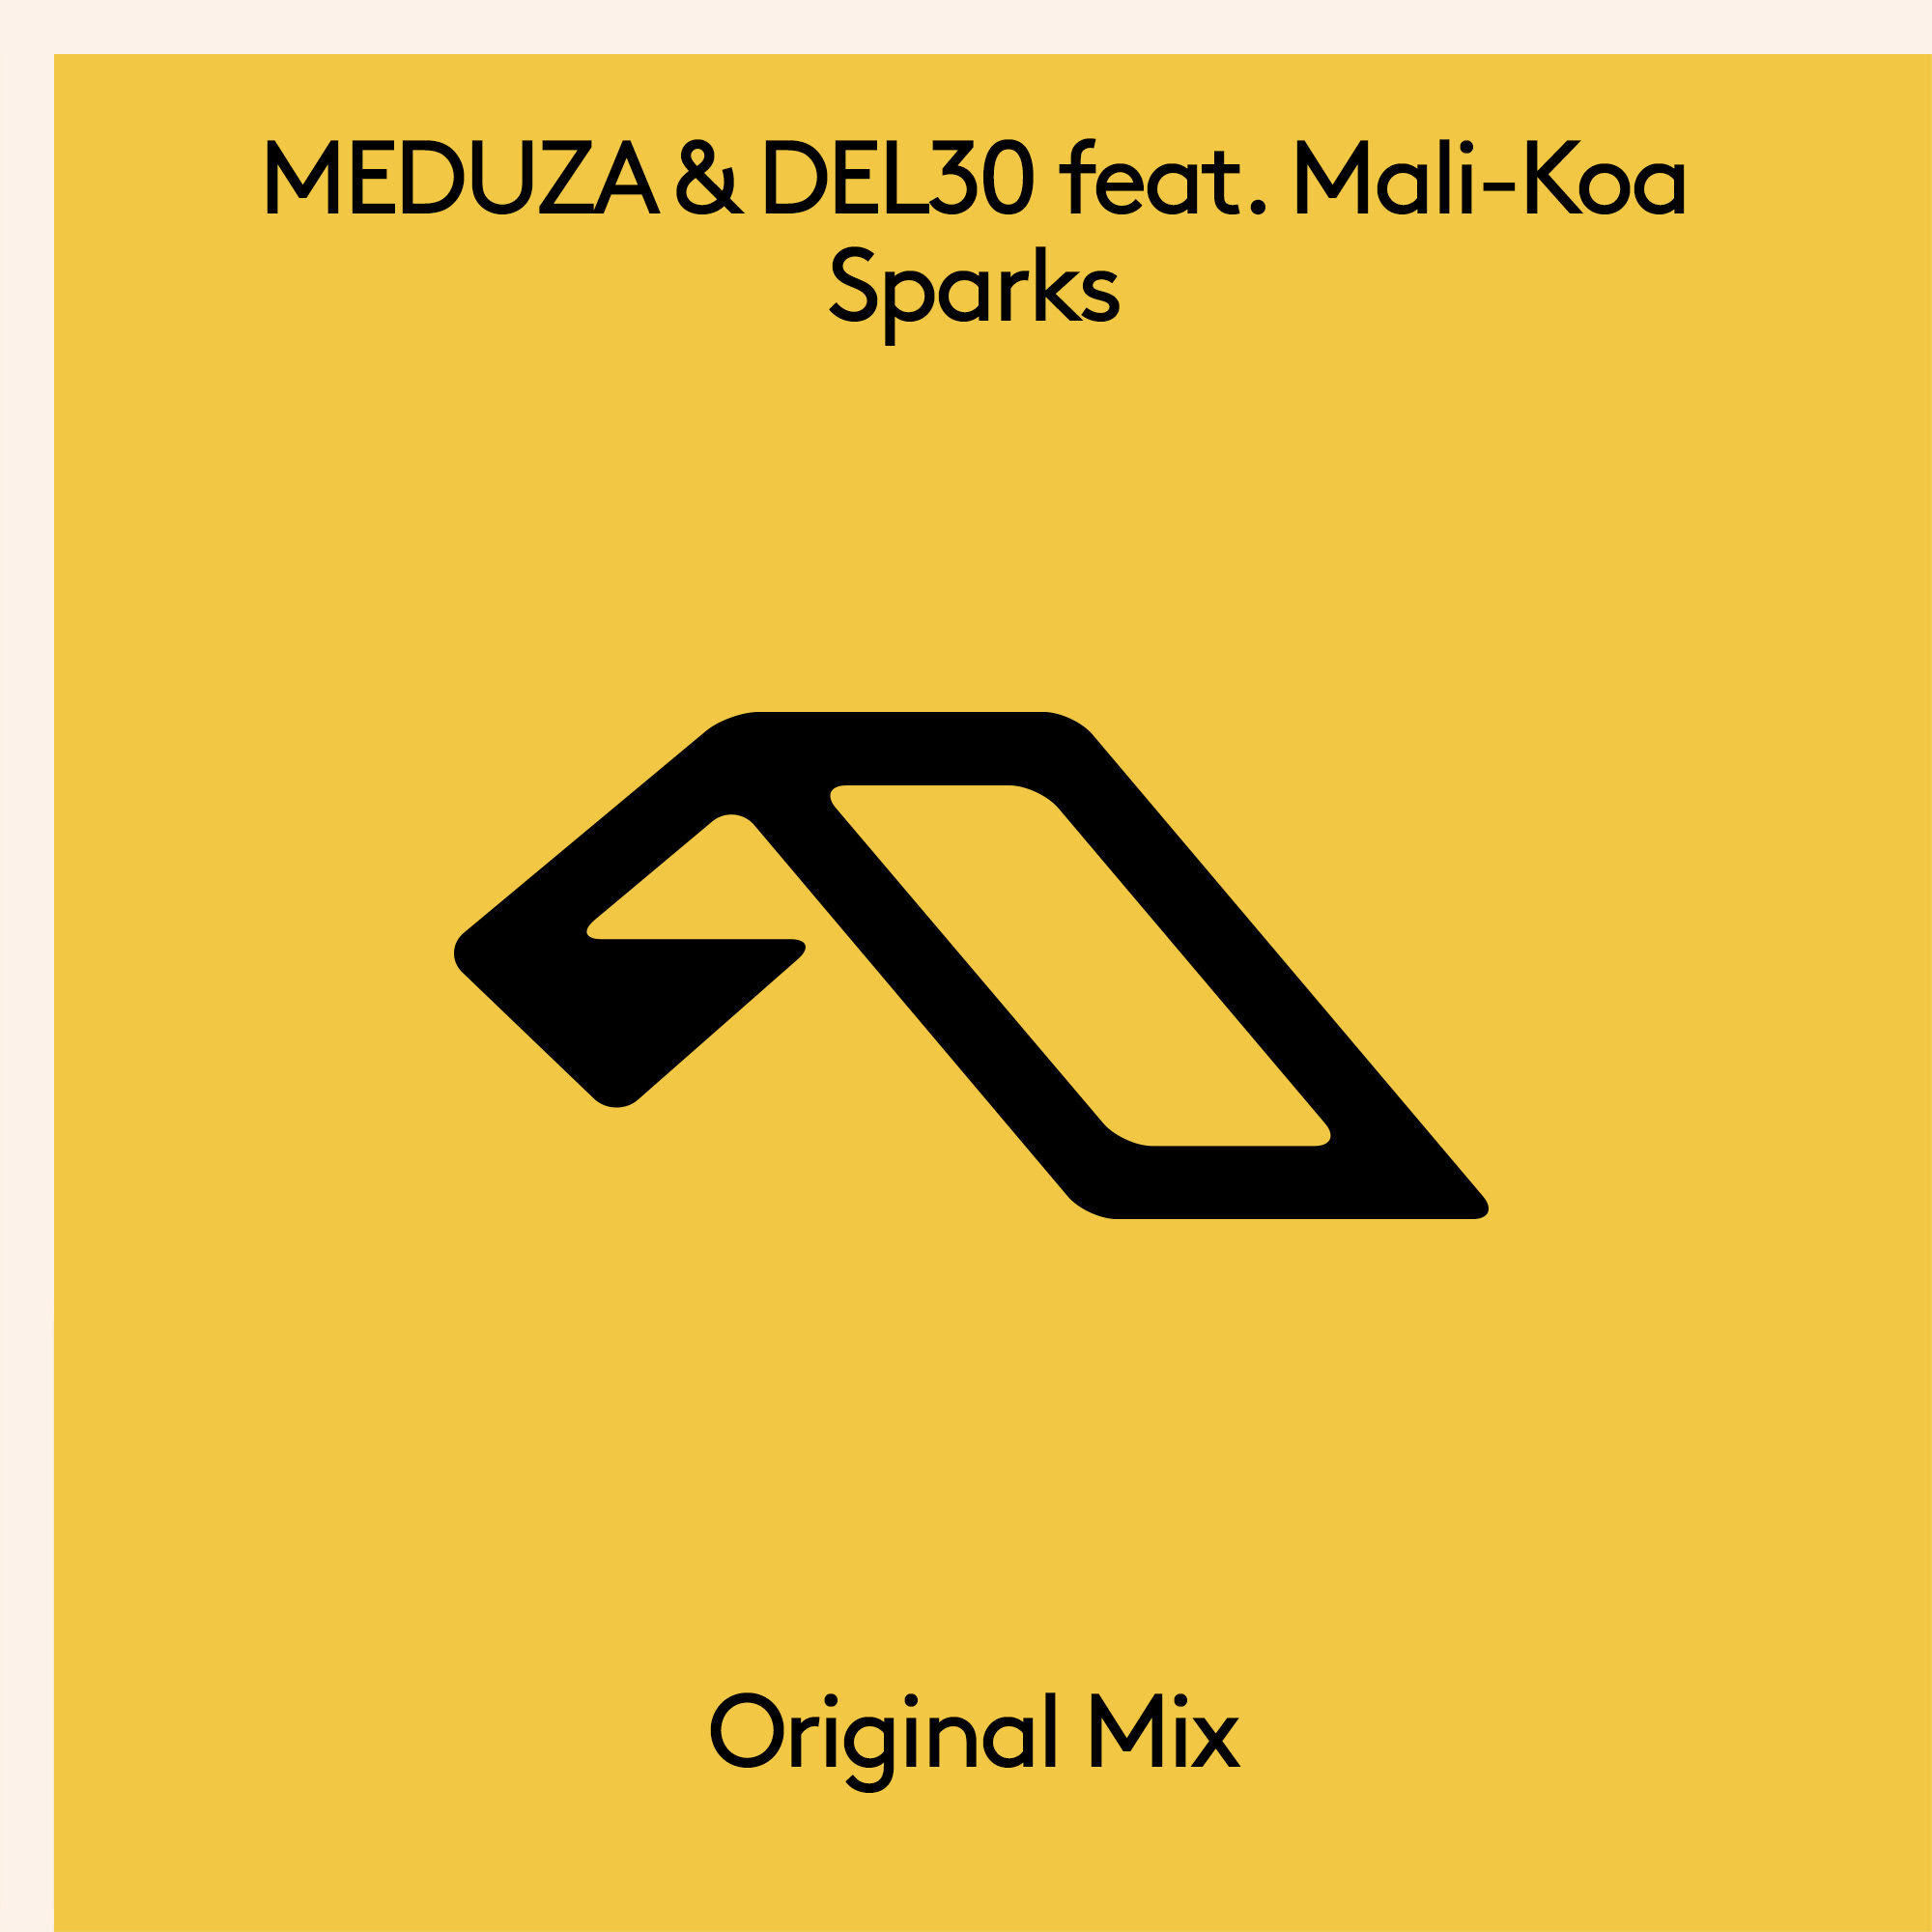 MEDUZA & DEL-30 ft. featuring Mali-Koa Sparks cover artwork